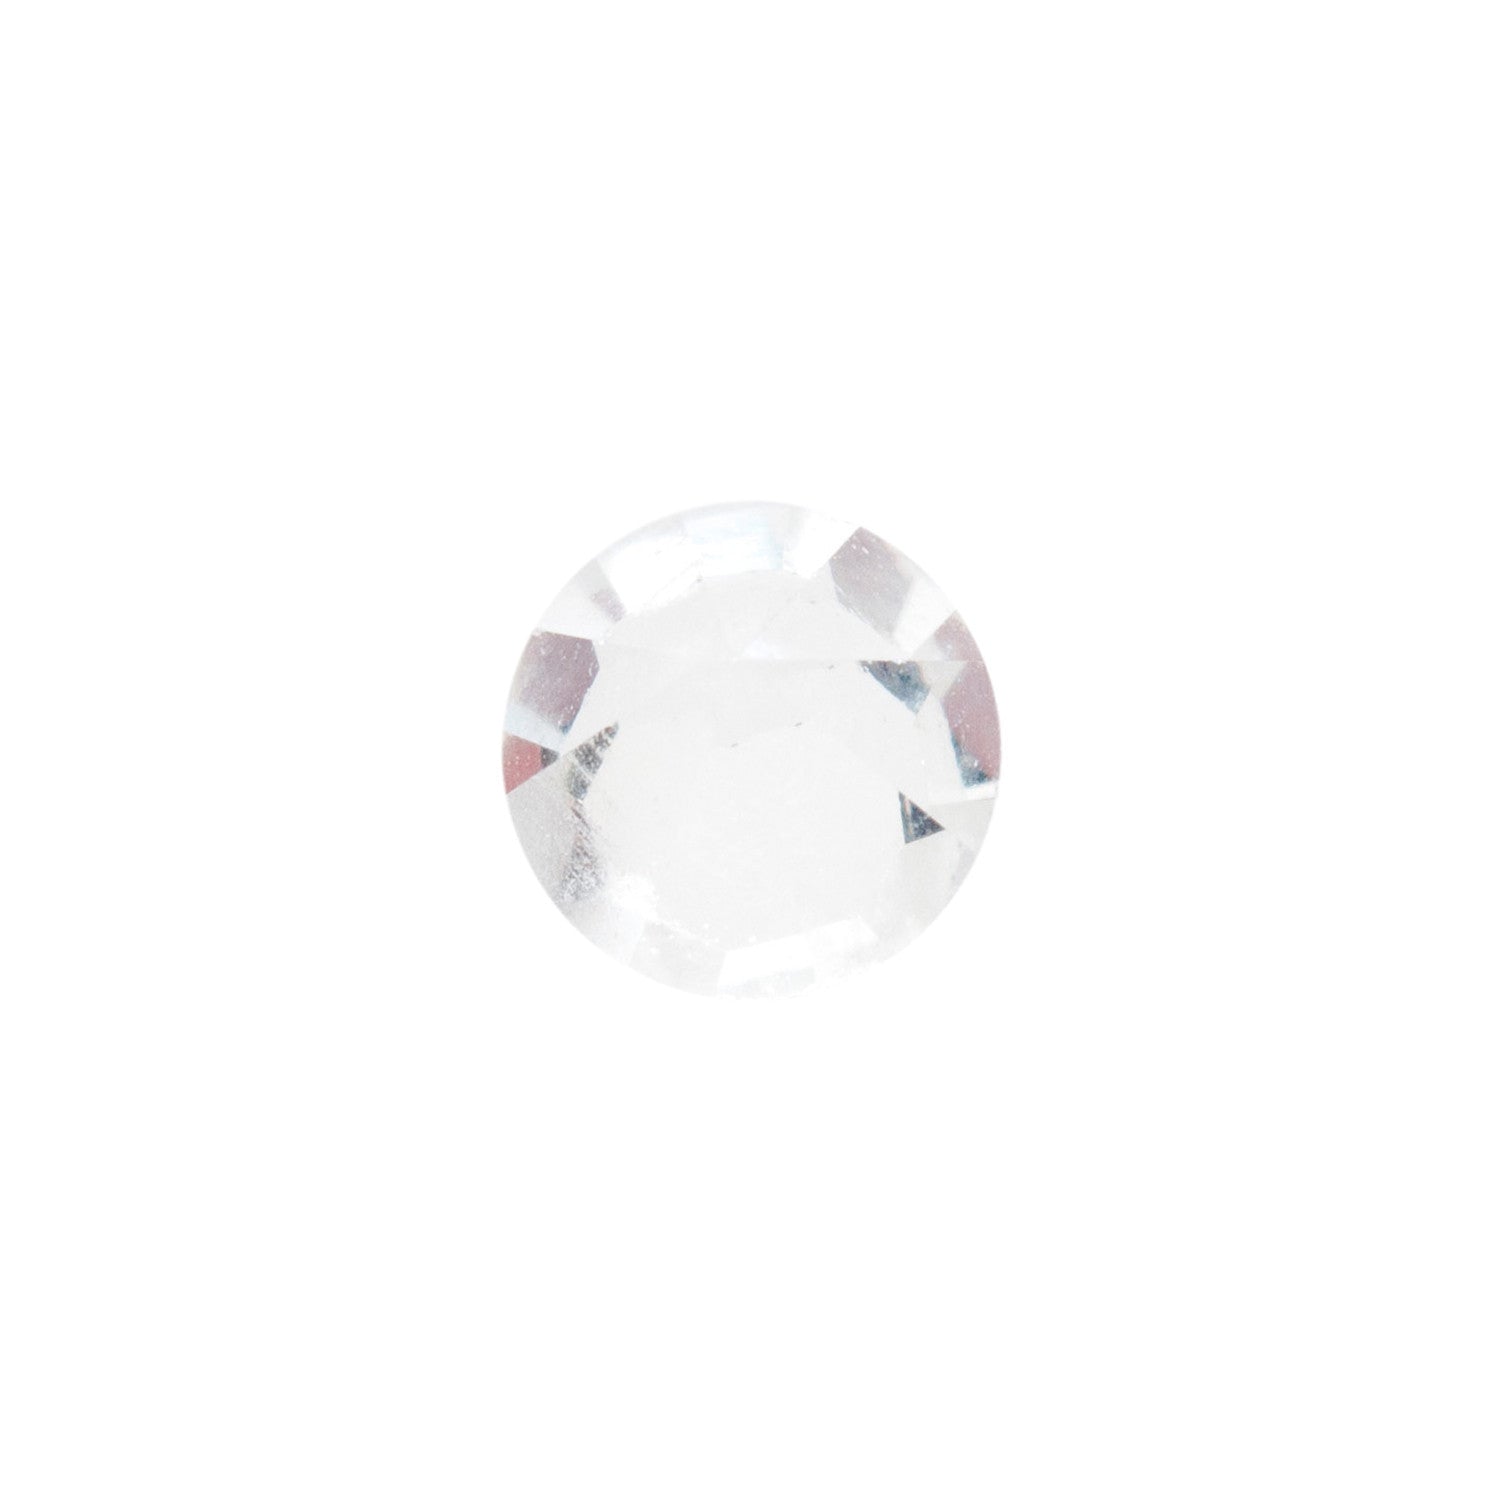 Memory Locket Charm - Birthstone Crystal (April - Diamond)